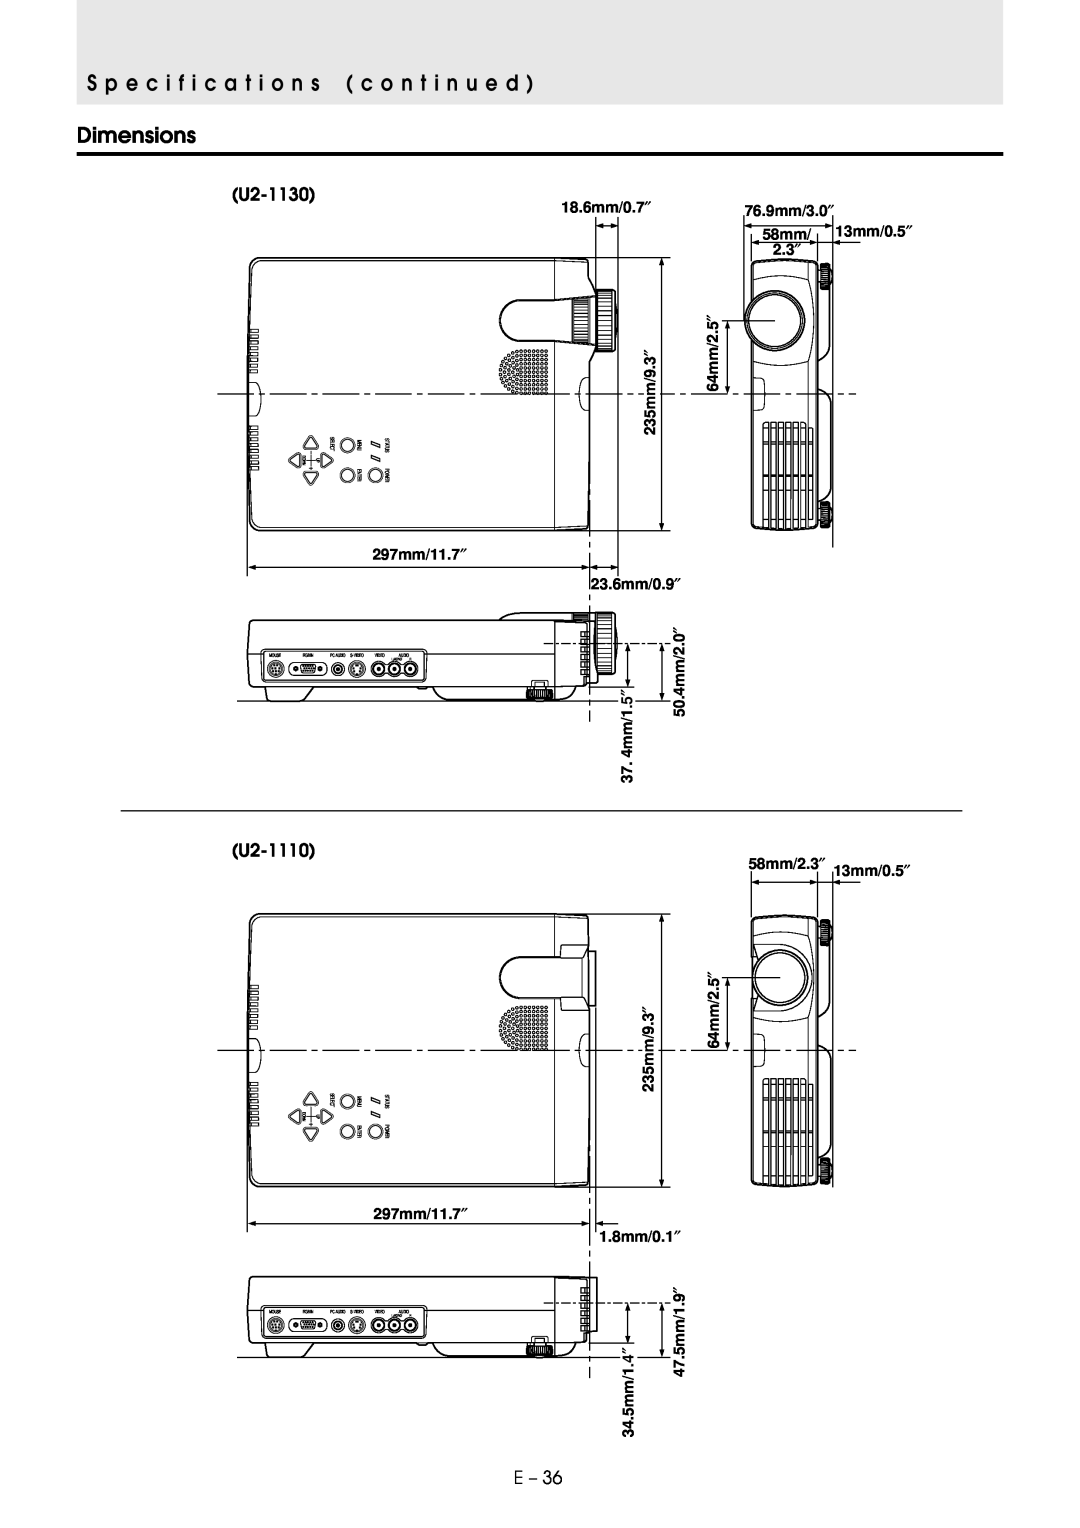 PLUS Vision U2-1130/U2-1110 user manual Dimensions, 18.6mm/0.7″, 64mm/2.5″, 76.9mm/3.0″, 23.6mm/0.9″, 1.8mm/0.1″, 13mm/0.5″ 